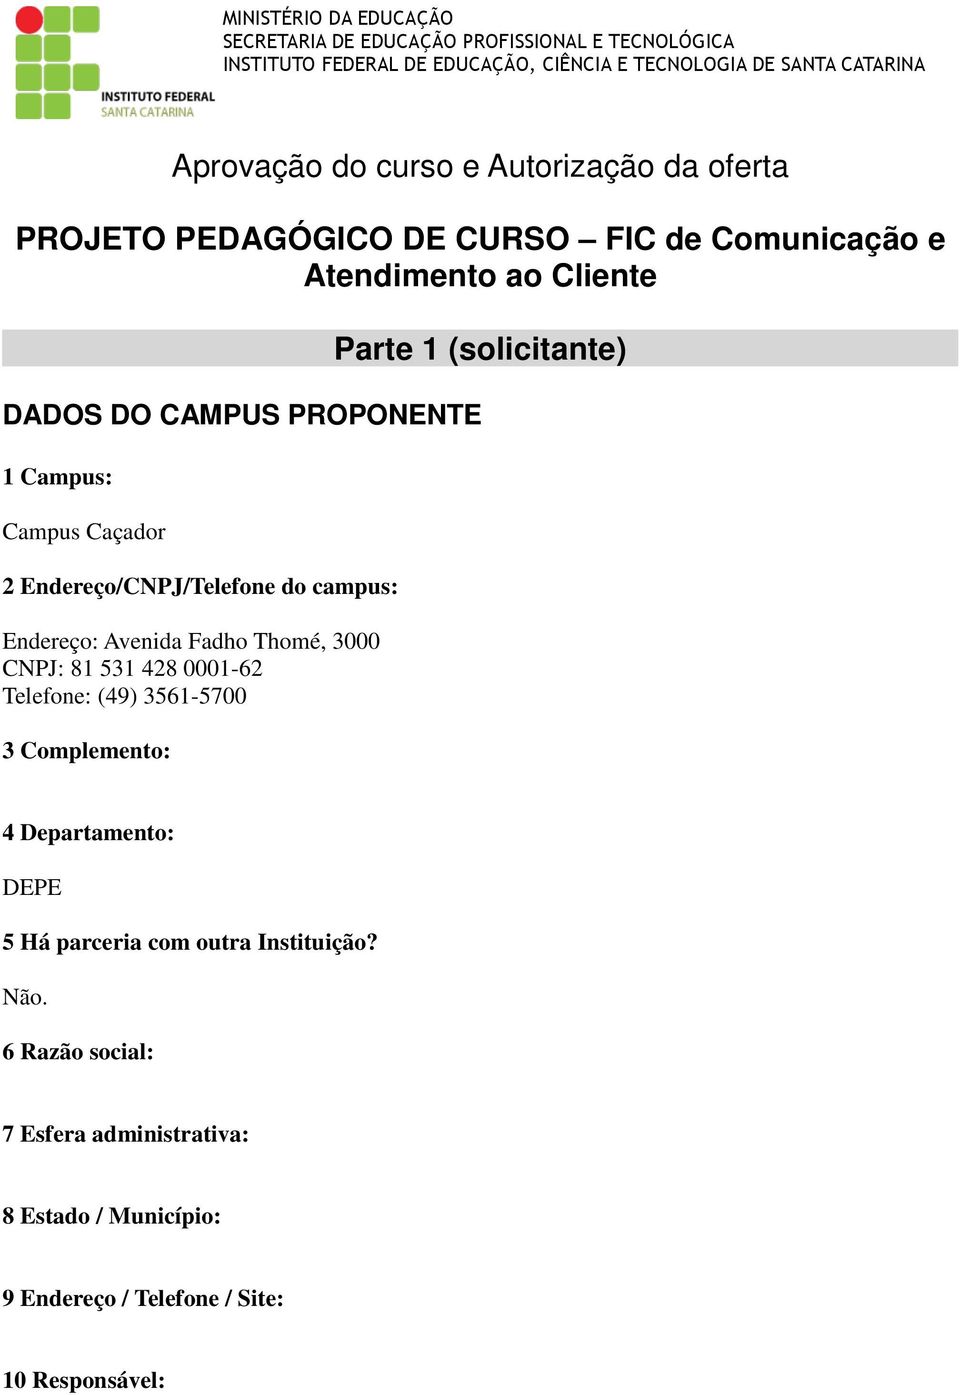 Campus: Campus Caçador 2 Endereço/CNPJ/Telefone do campus: Endereço: Avenida Fadho Thomé, 3000 CNPJ: 81 531 428 0001-62 Telefone: (49) 3561-5700 3 Complemento: